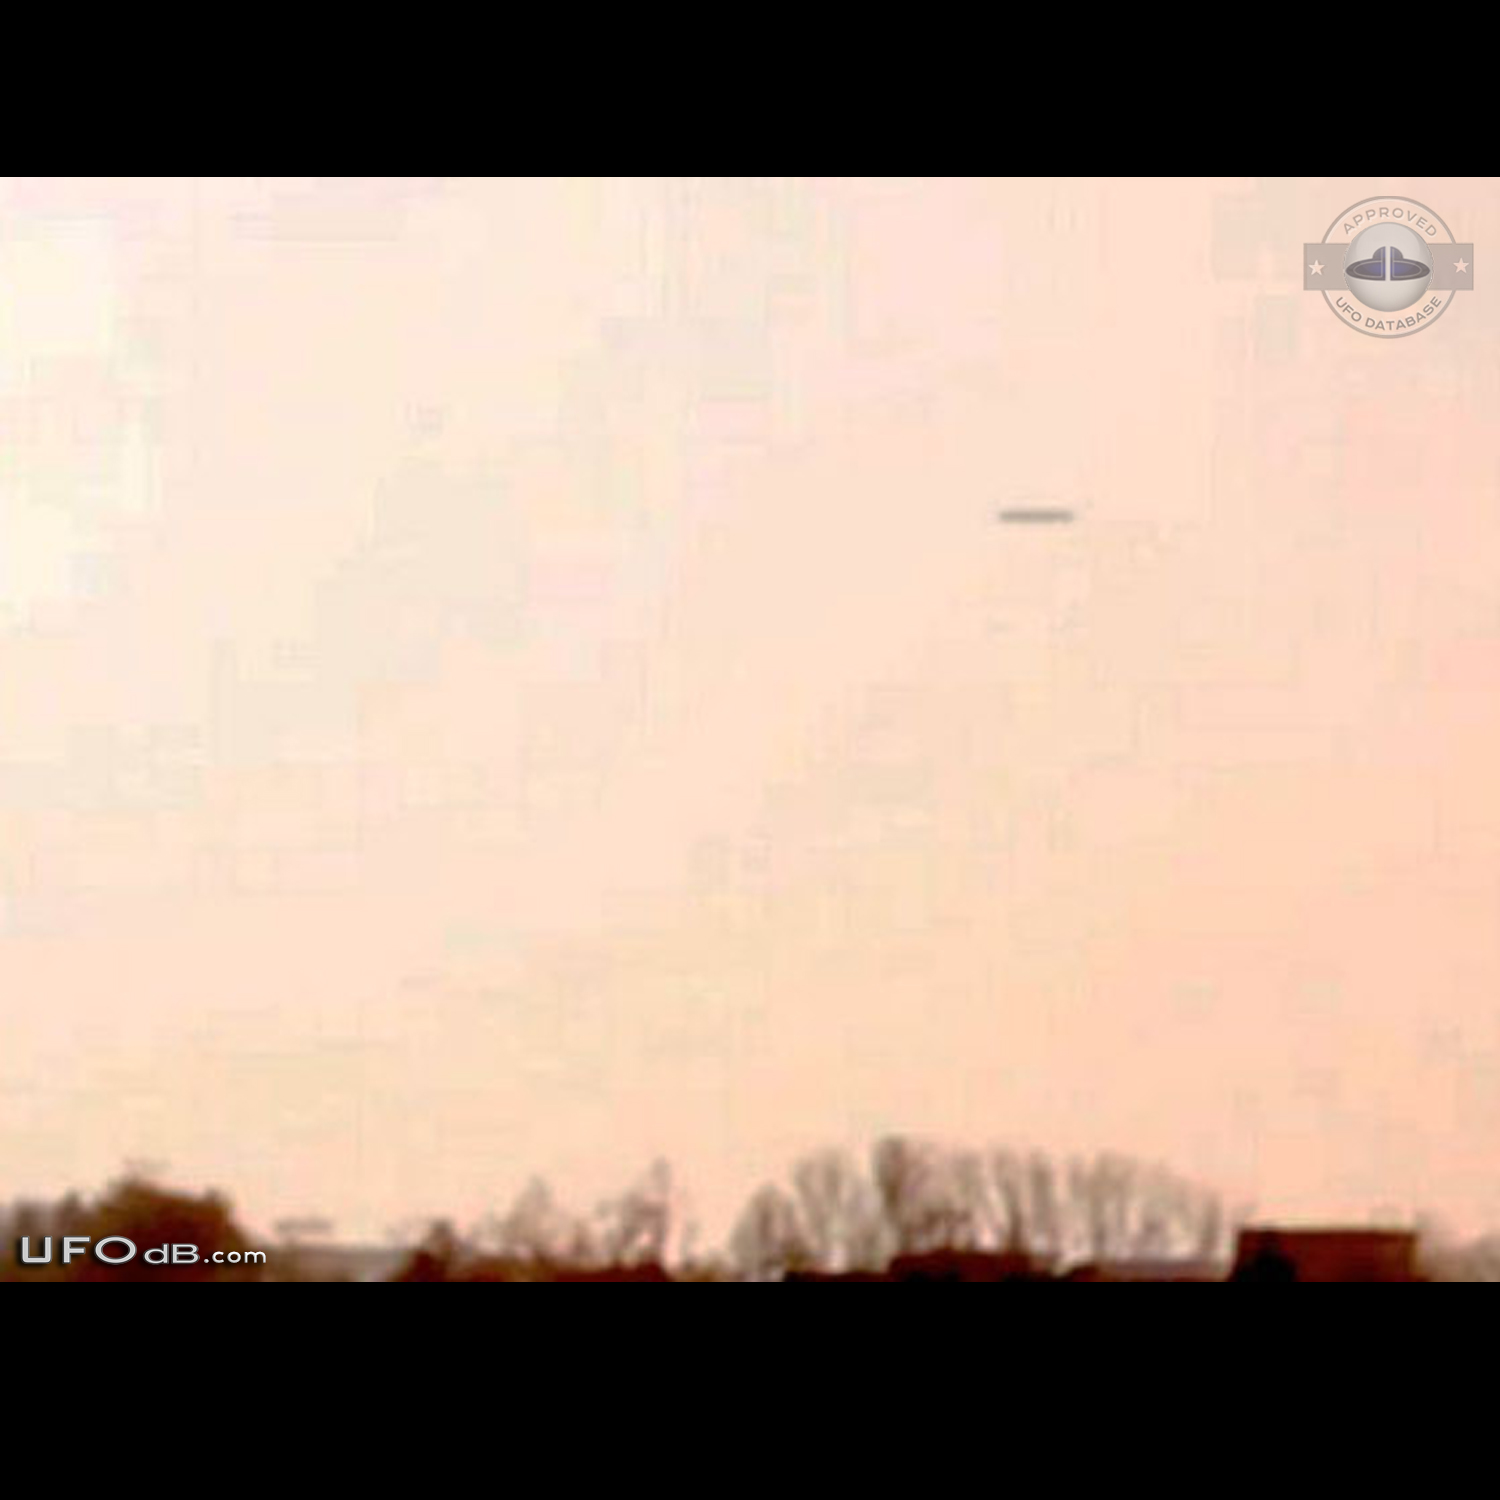 300 M Cylinder UFO Sky Dreadnaught near Russia/Ukraine Conflict - 2014 UFO Picture #559-7